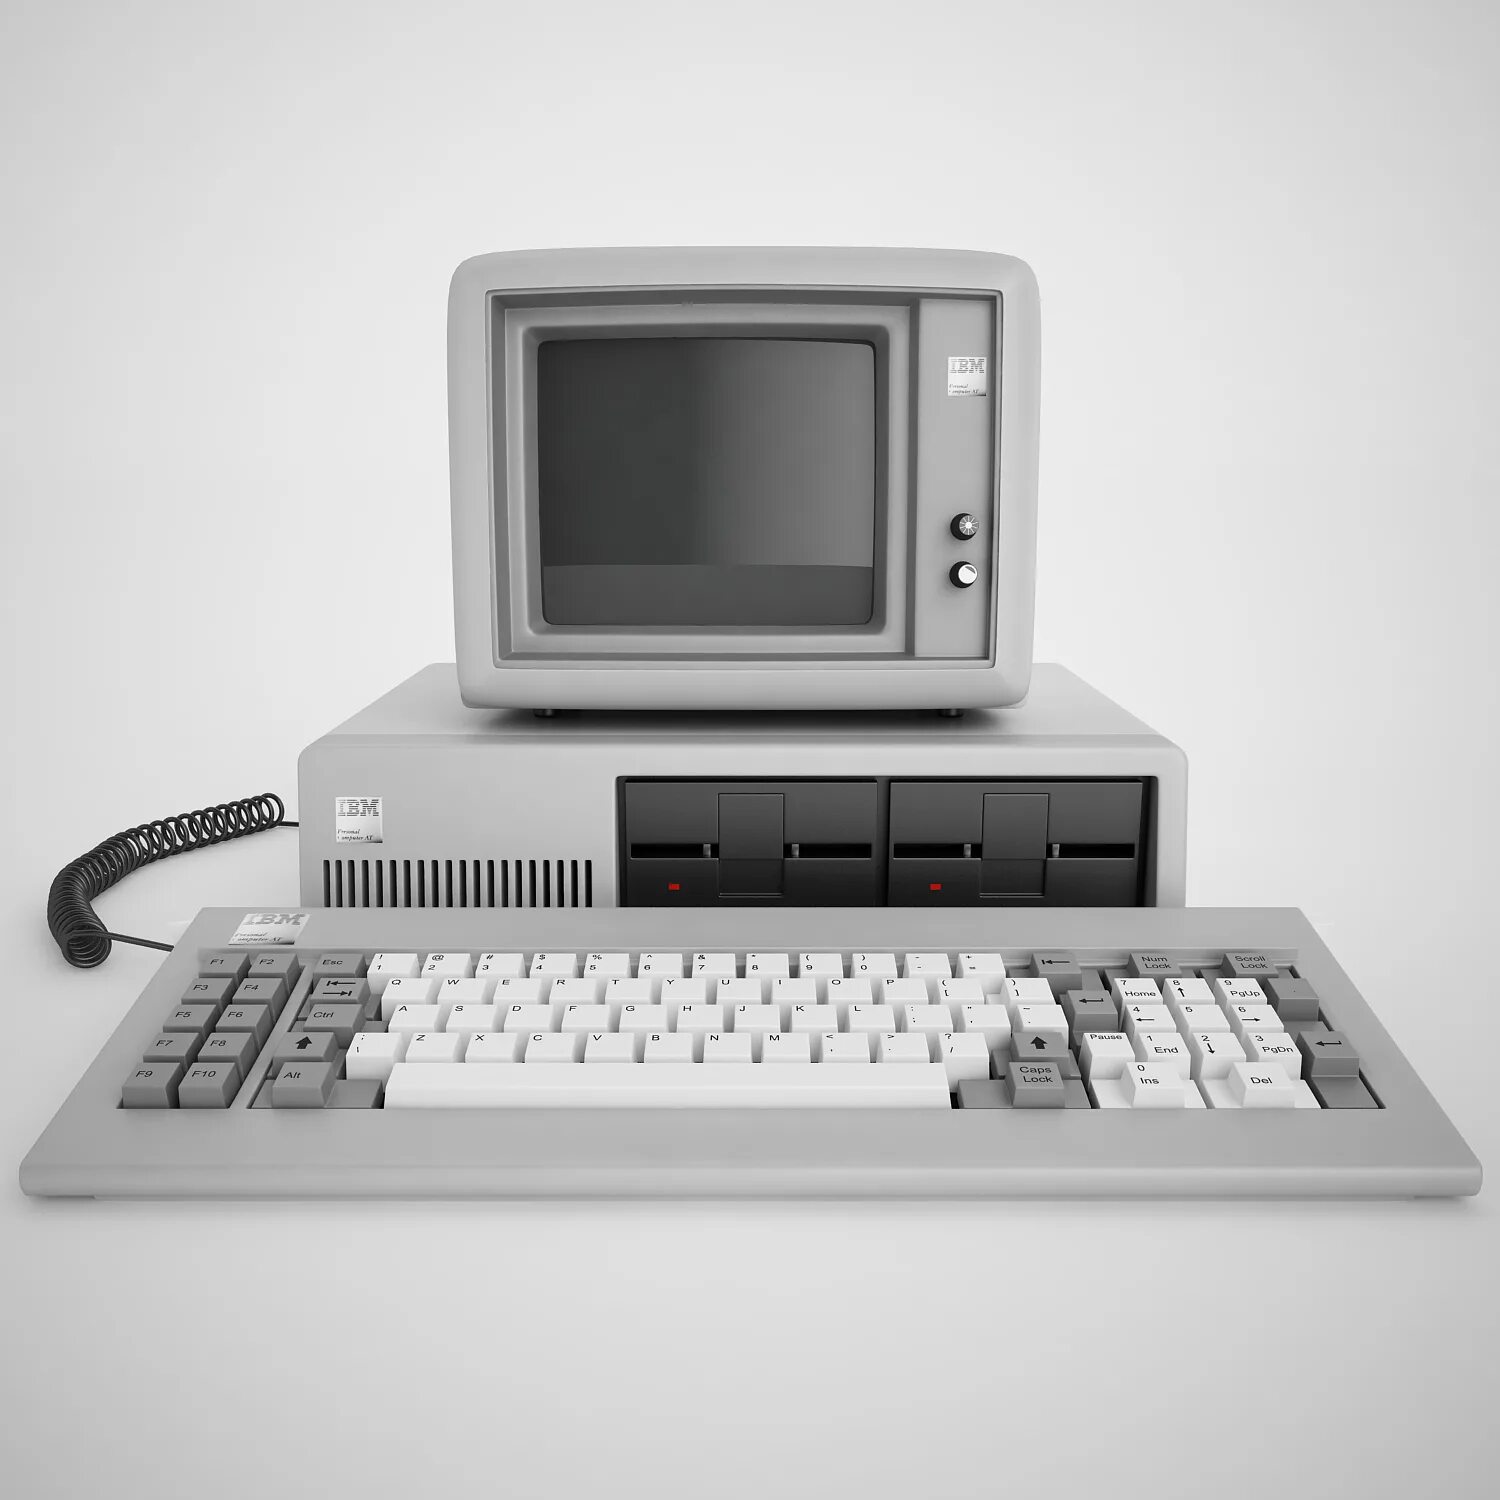 Ibm xt. IBM PC XT 5160. Компьютер IBM PC/XT. IBM PC model 5160. IBM PC XT 286.